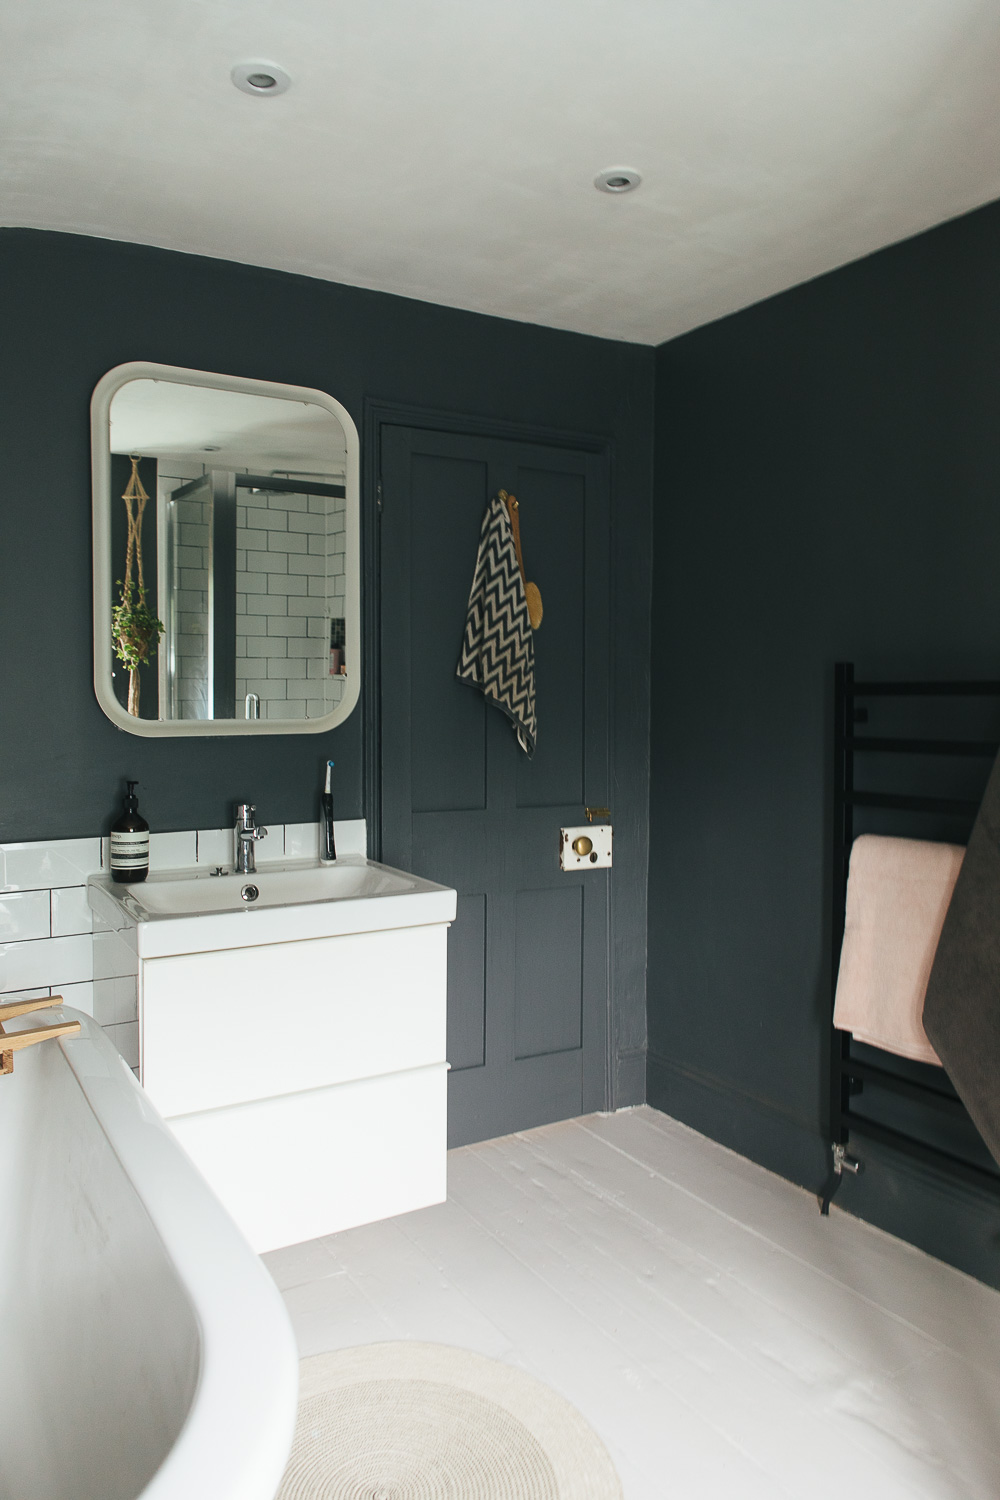 Choosing a light or dark bathroom colour scheme for a small space